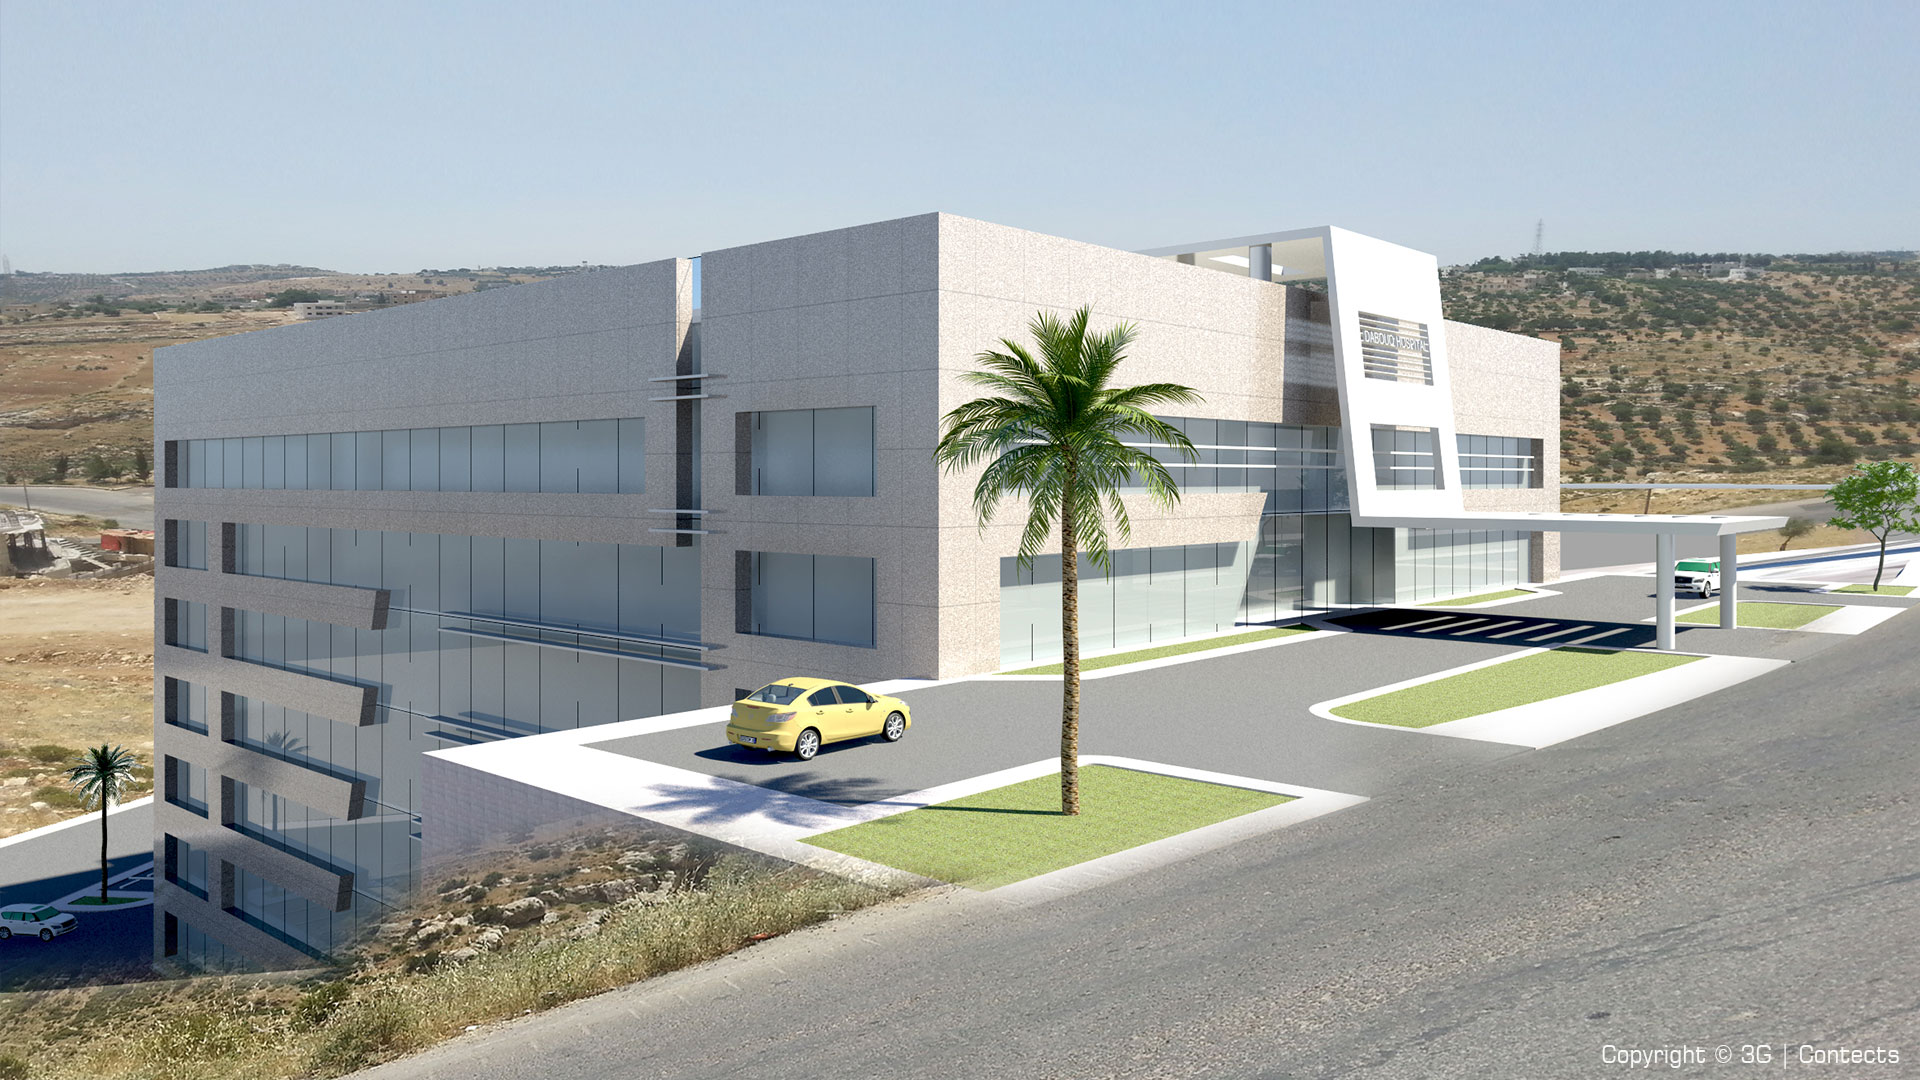 Zayed Military Hospital (Al-Ain) Expansion